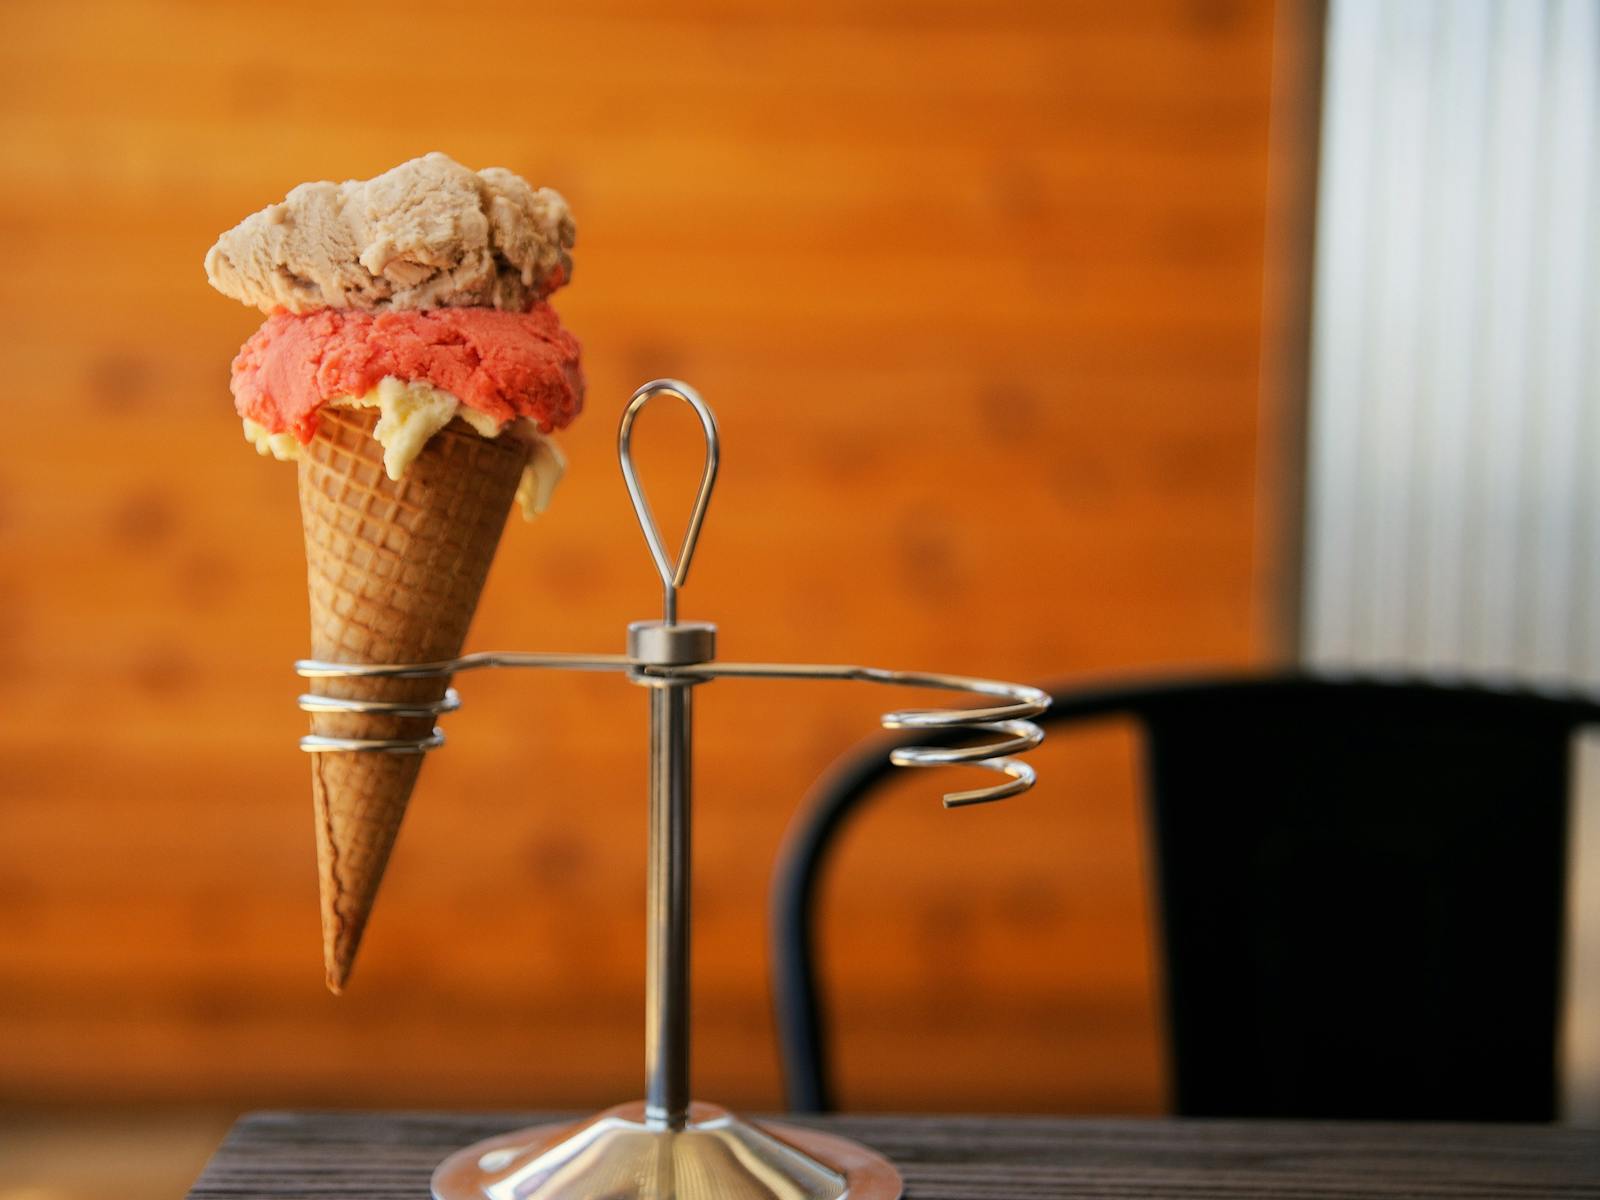 Stop at Van Diemens Land Creamery Cafe for an ice cream